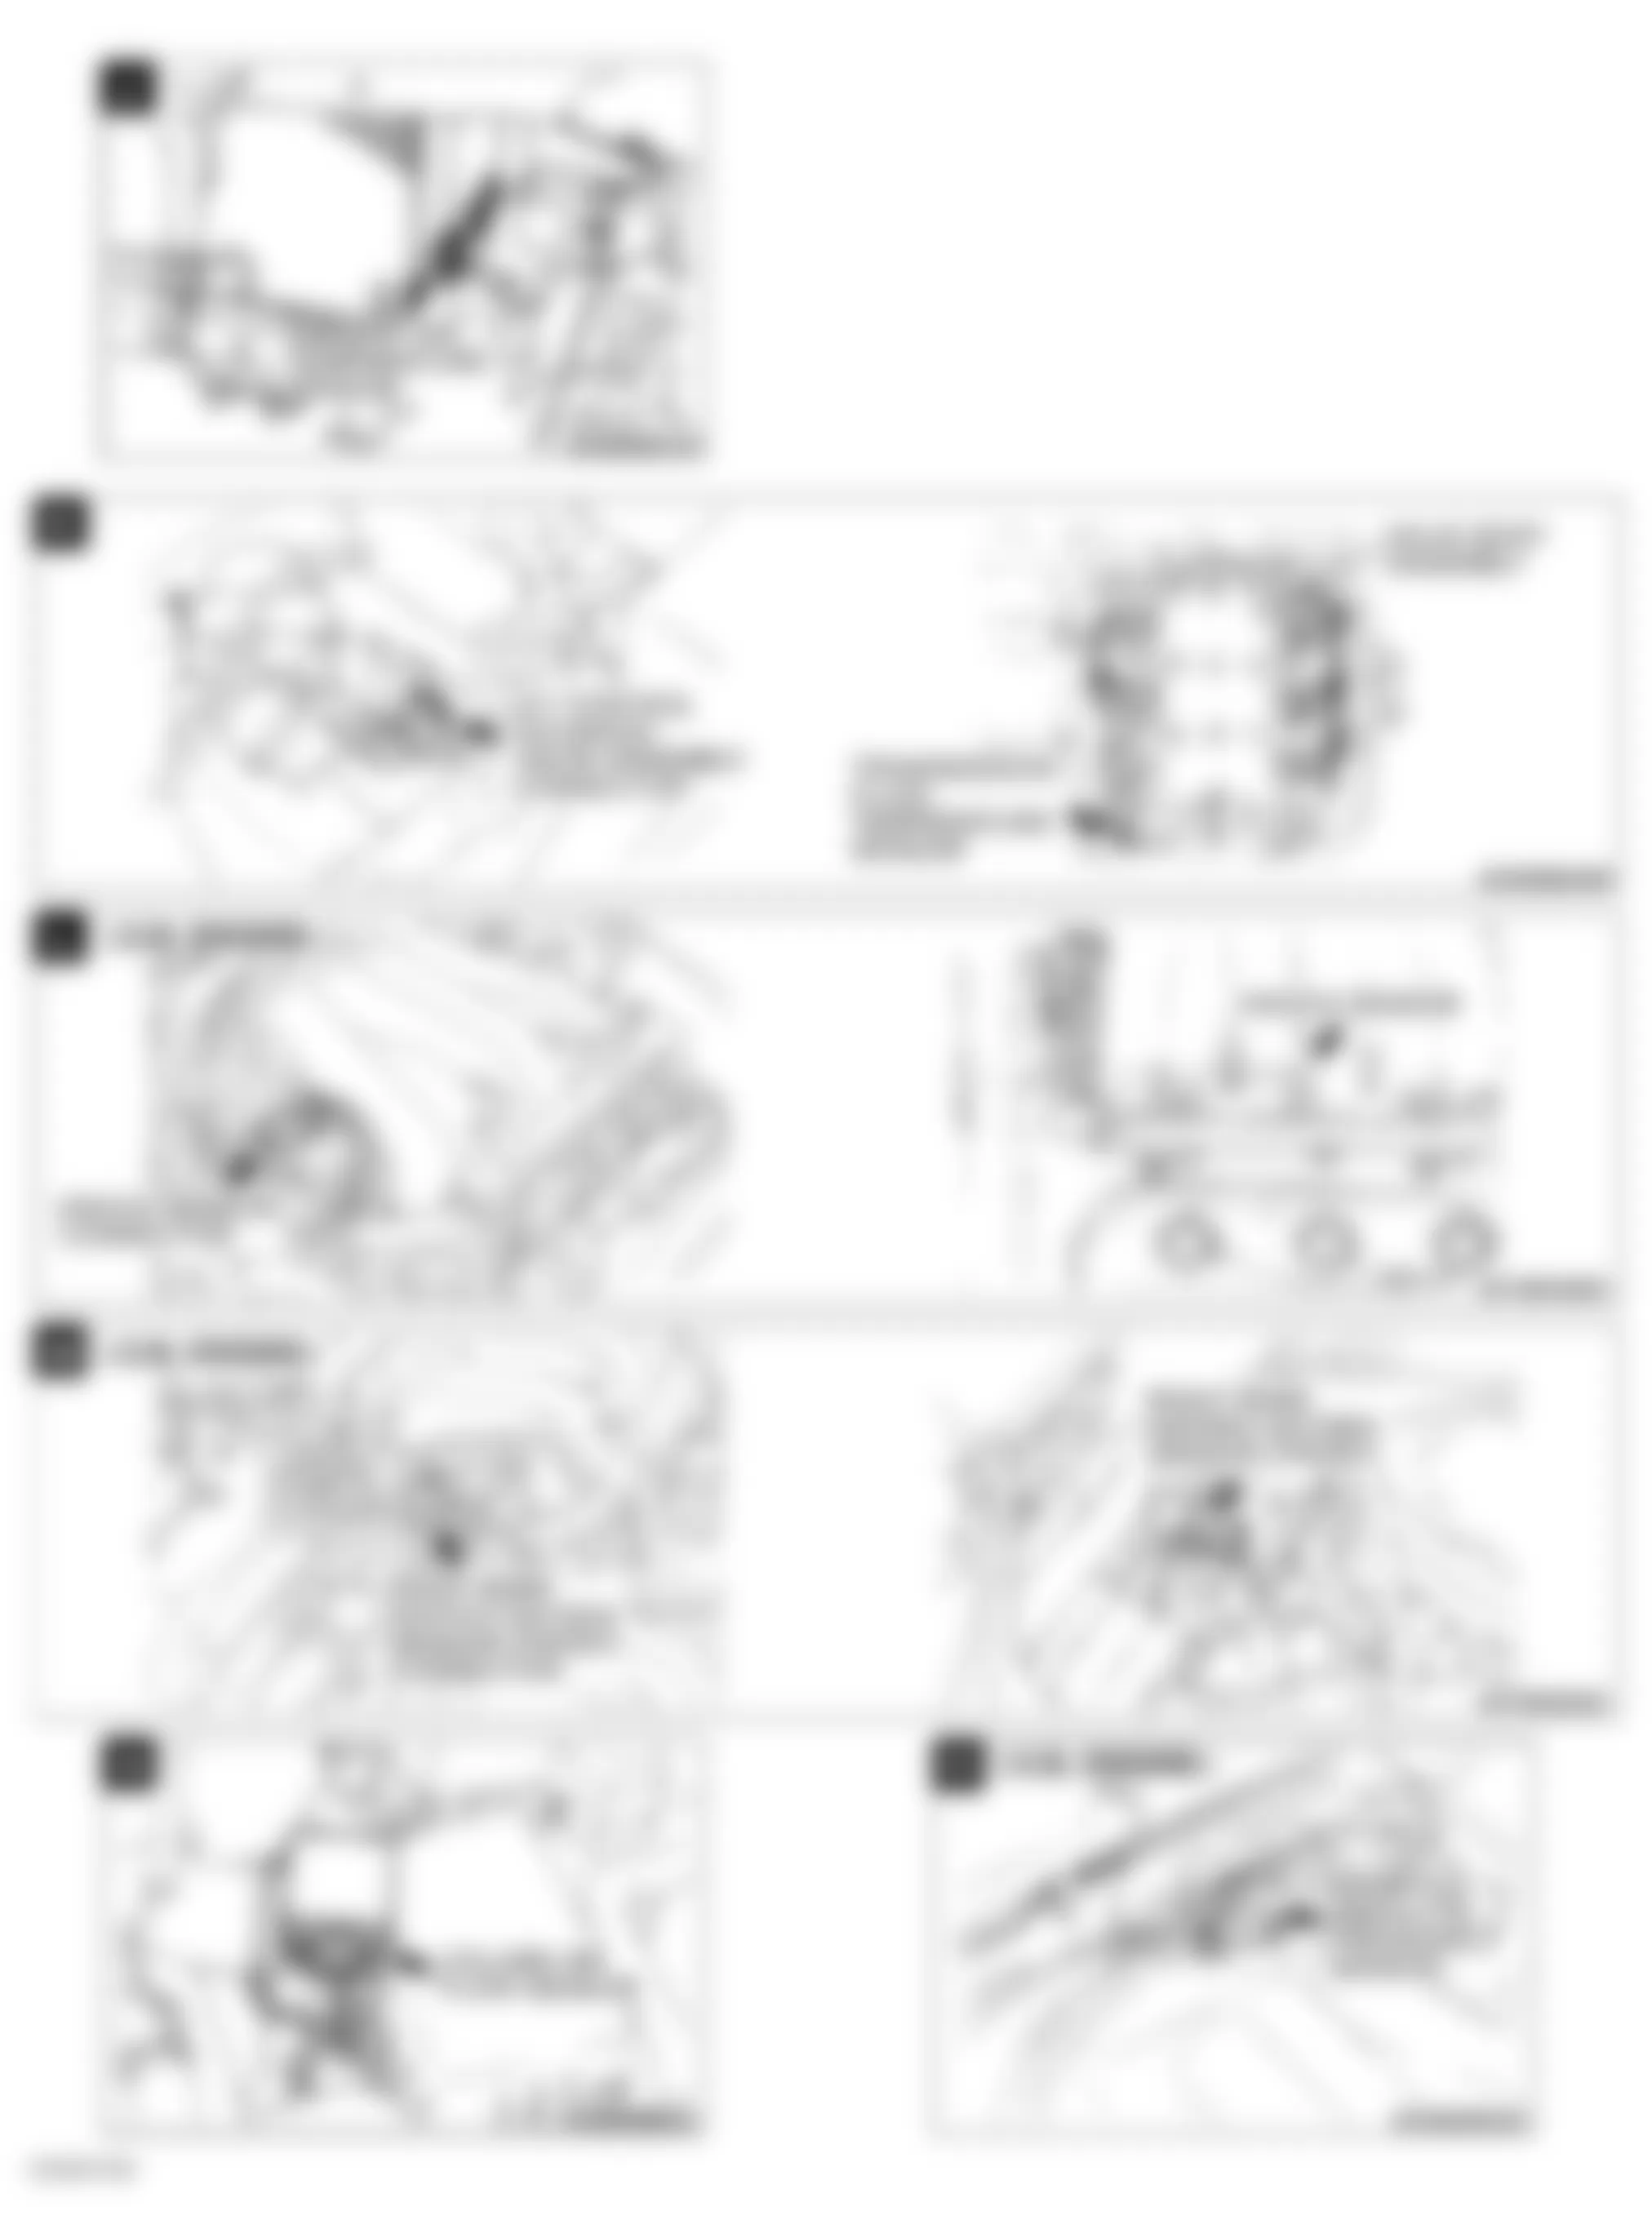 Dodge Stratus R/T 2005 - Component Locations -  Sensor Views (3 Of 6)